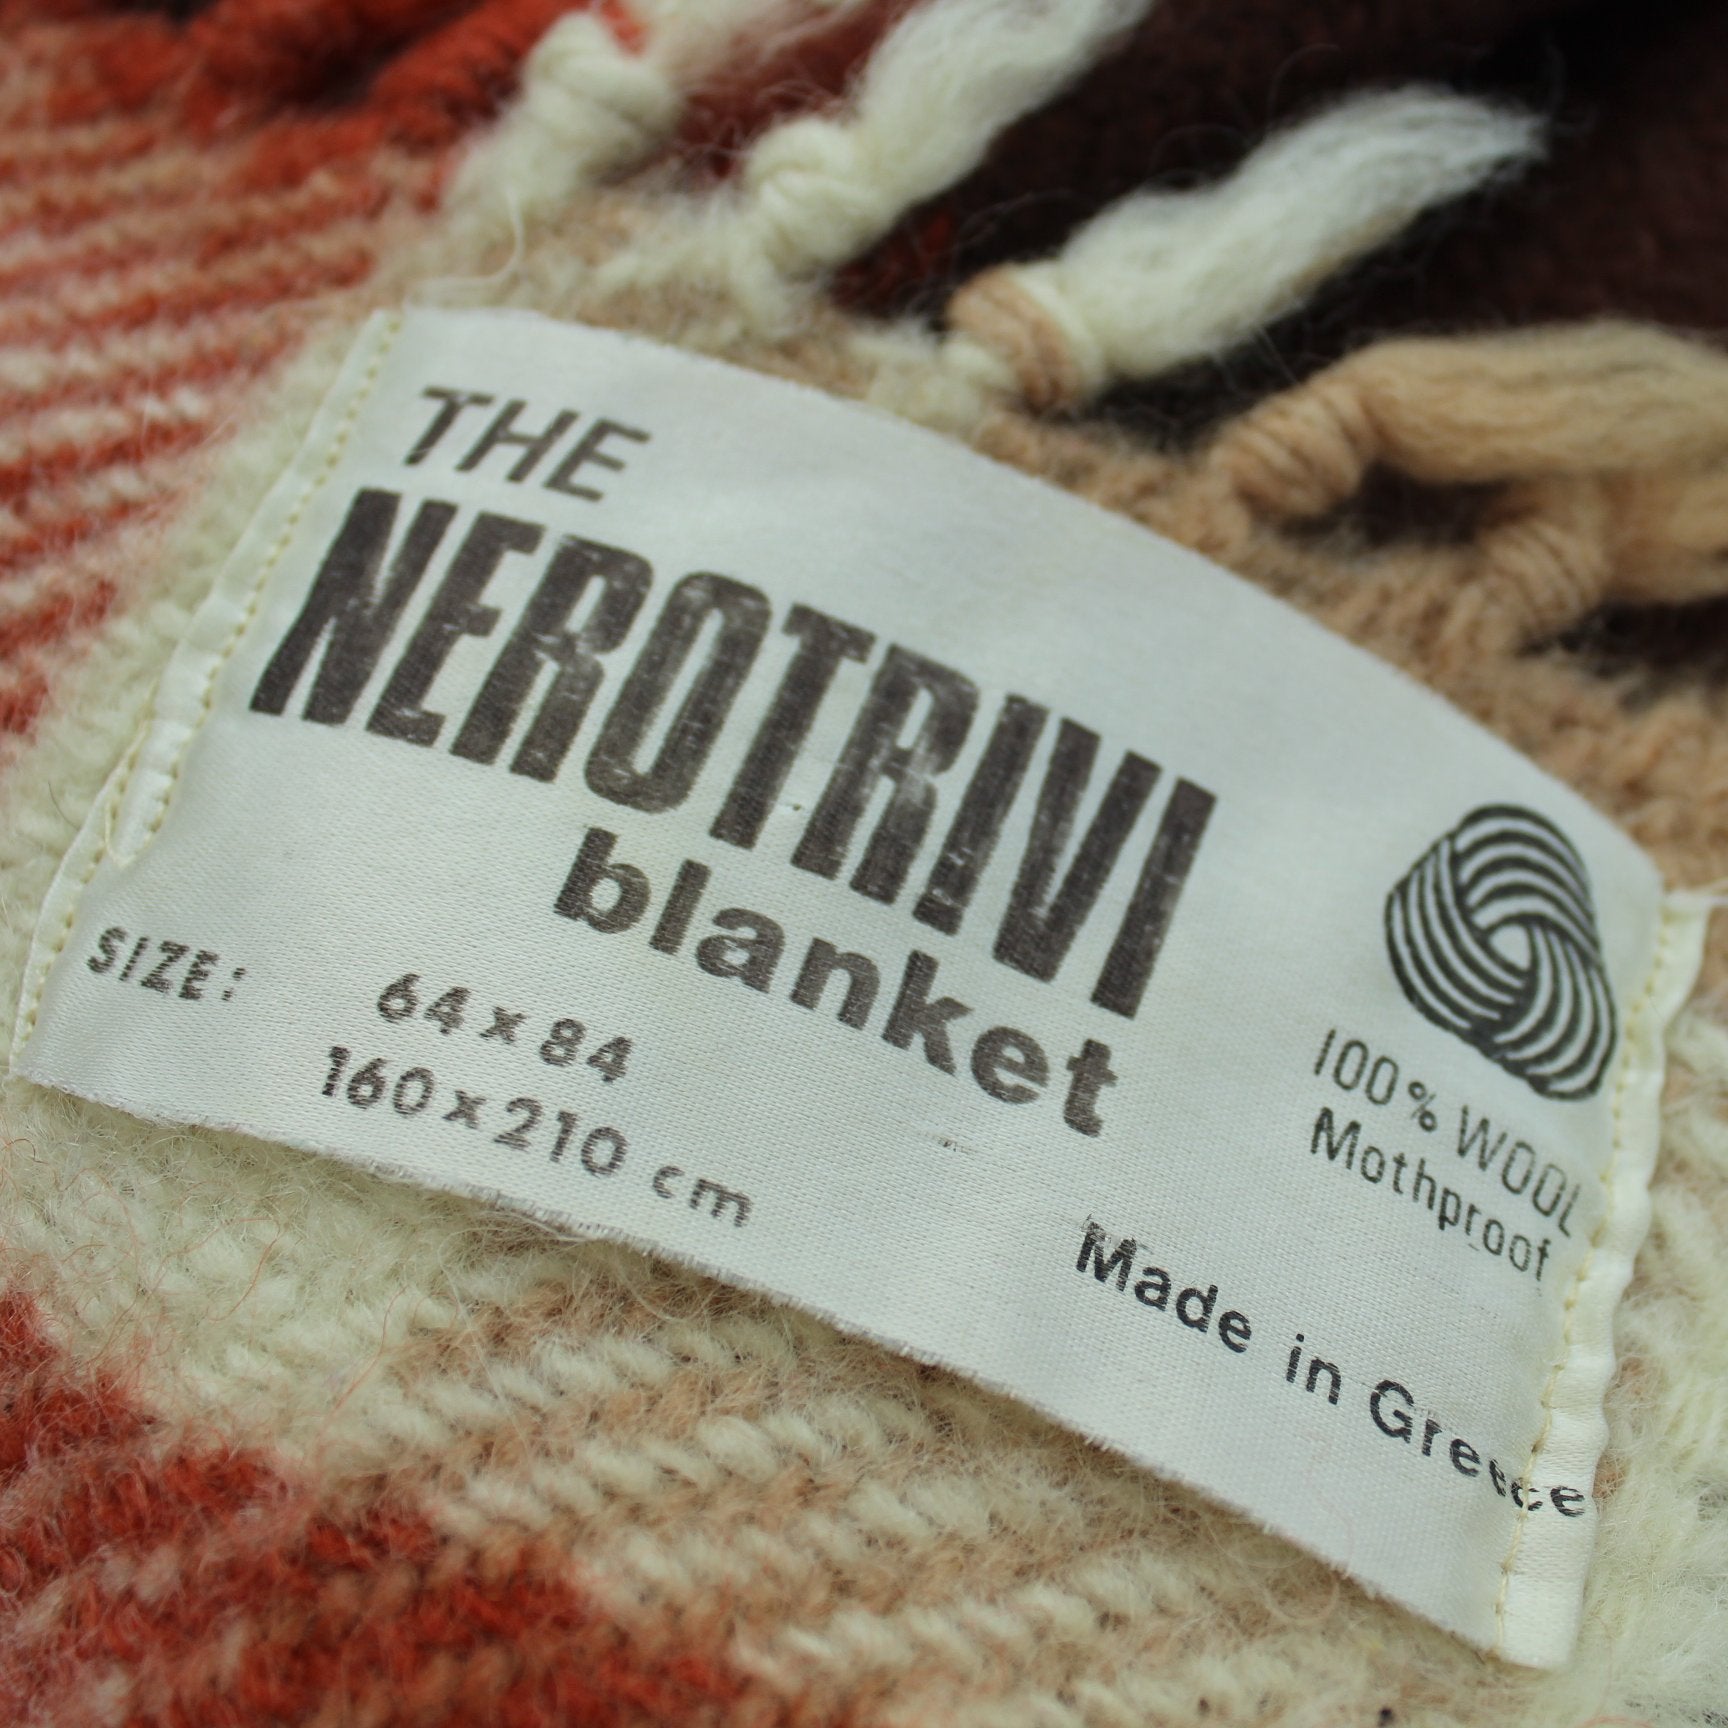 Nerotrivi Greece Heavy Wool Blanket Travel Rug Plaid Brown Sienna Cream Plaid original tag maker